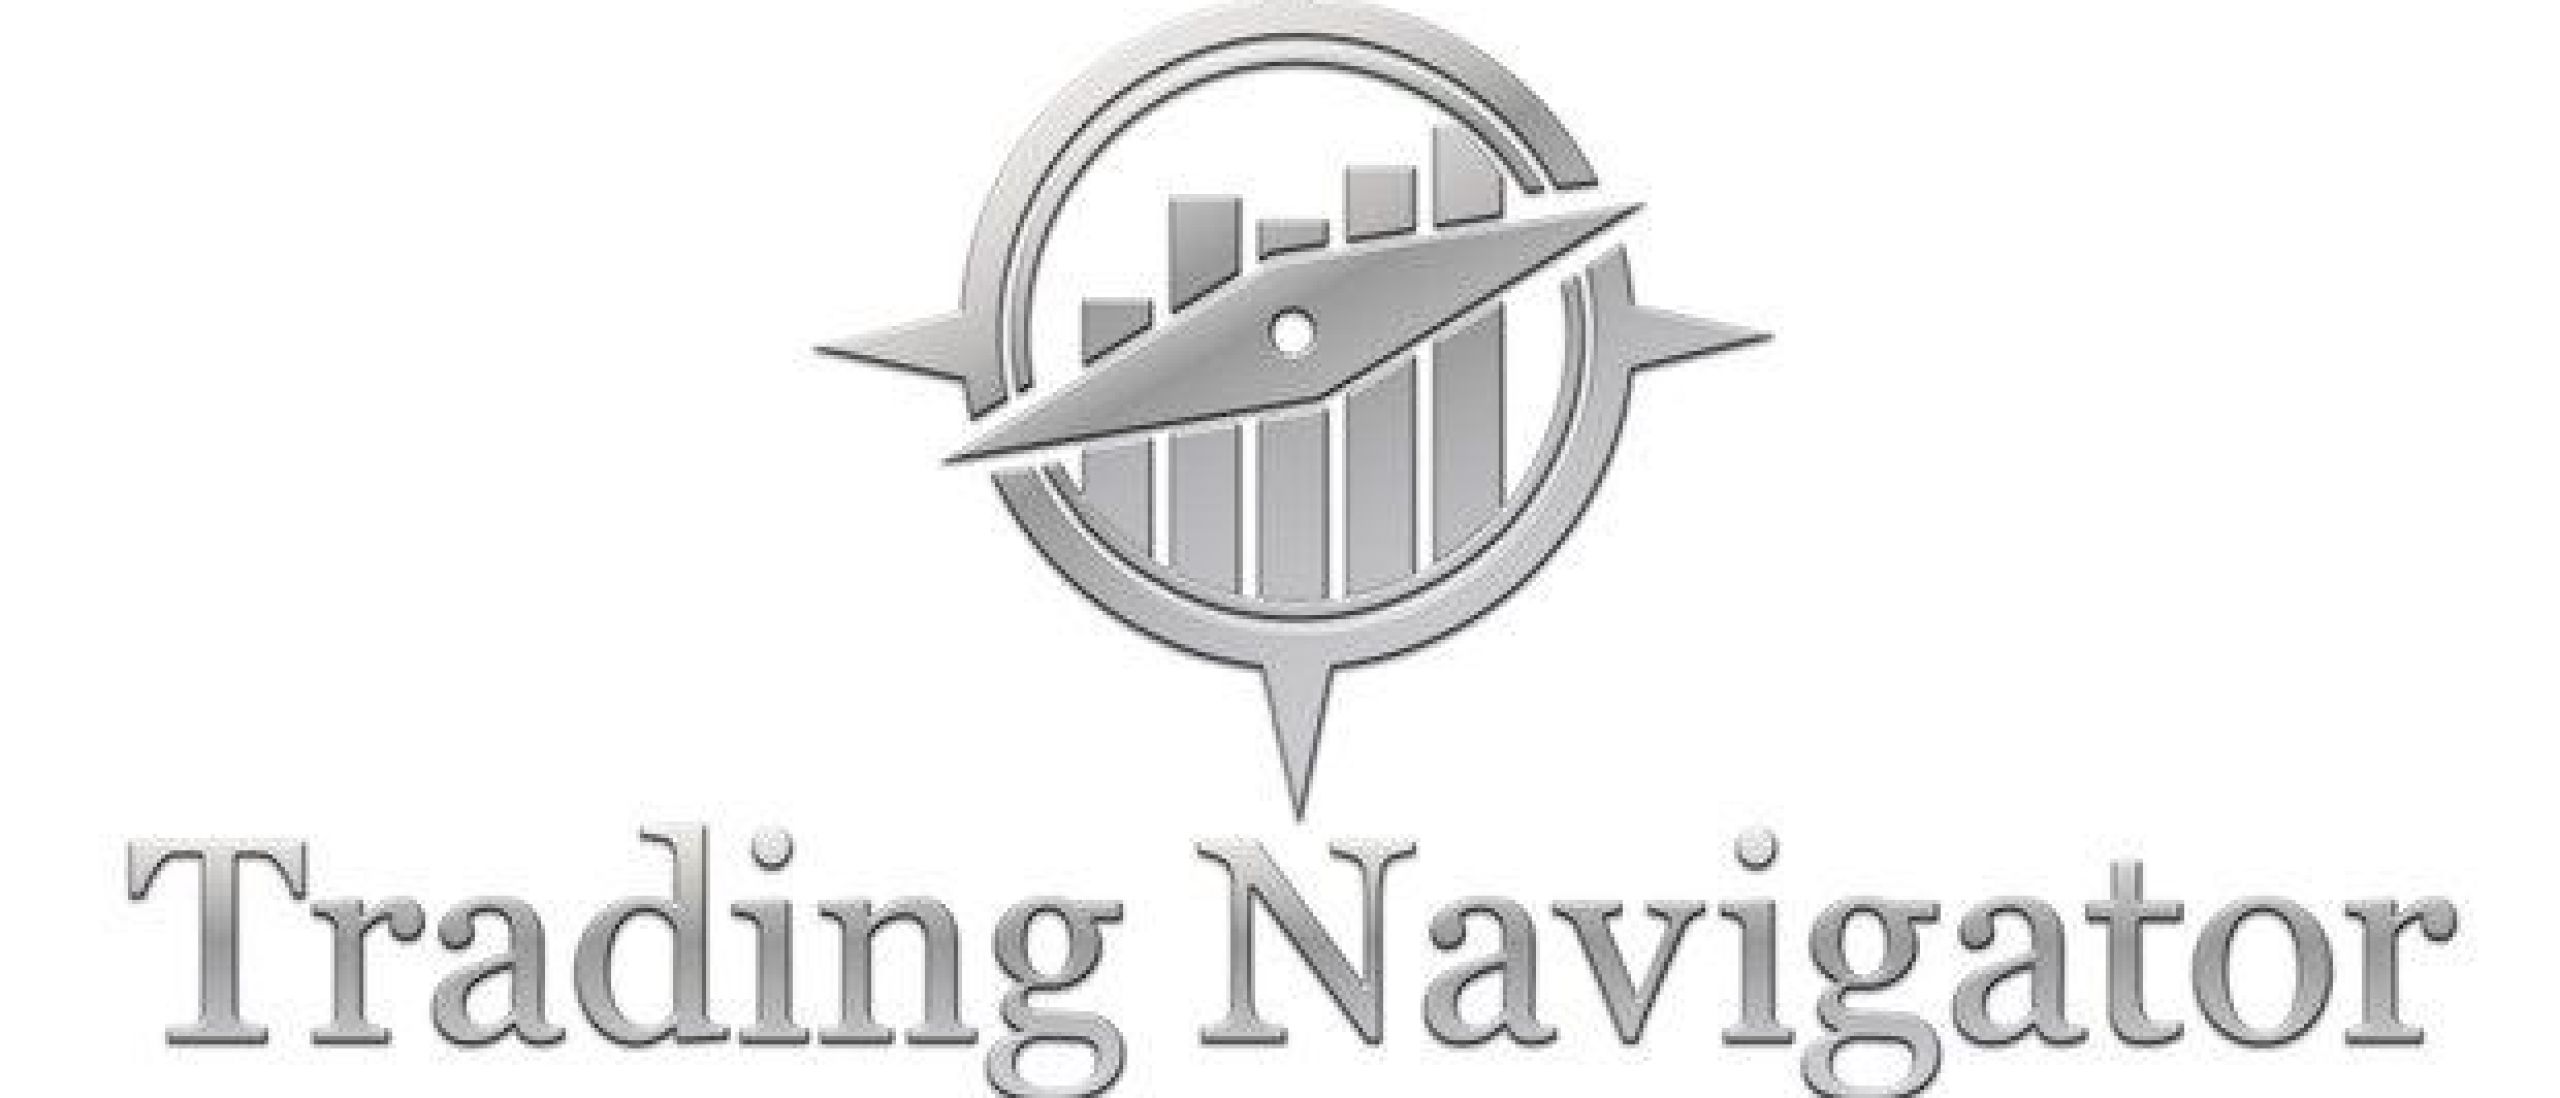 Trading Navigator Methode review